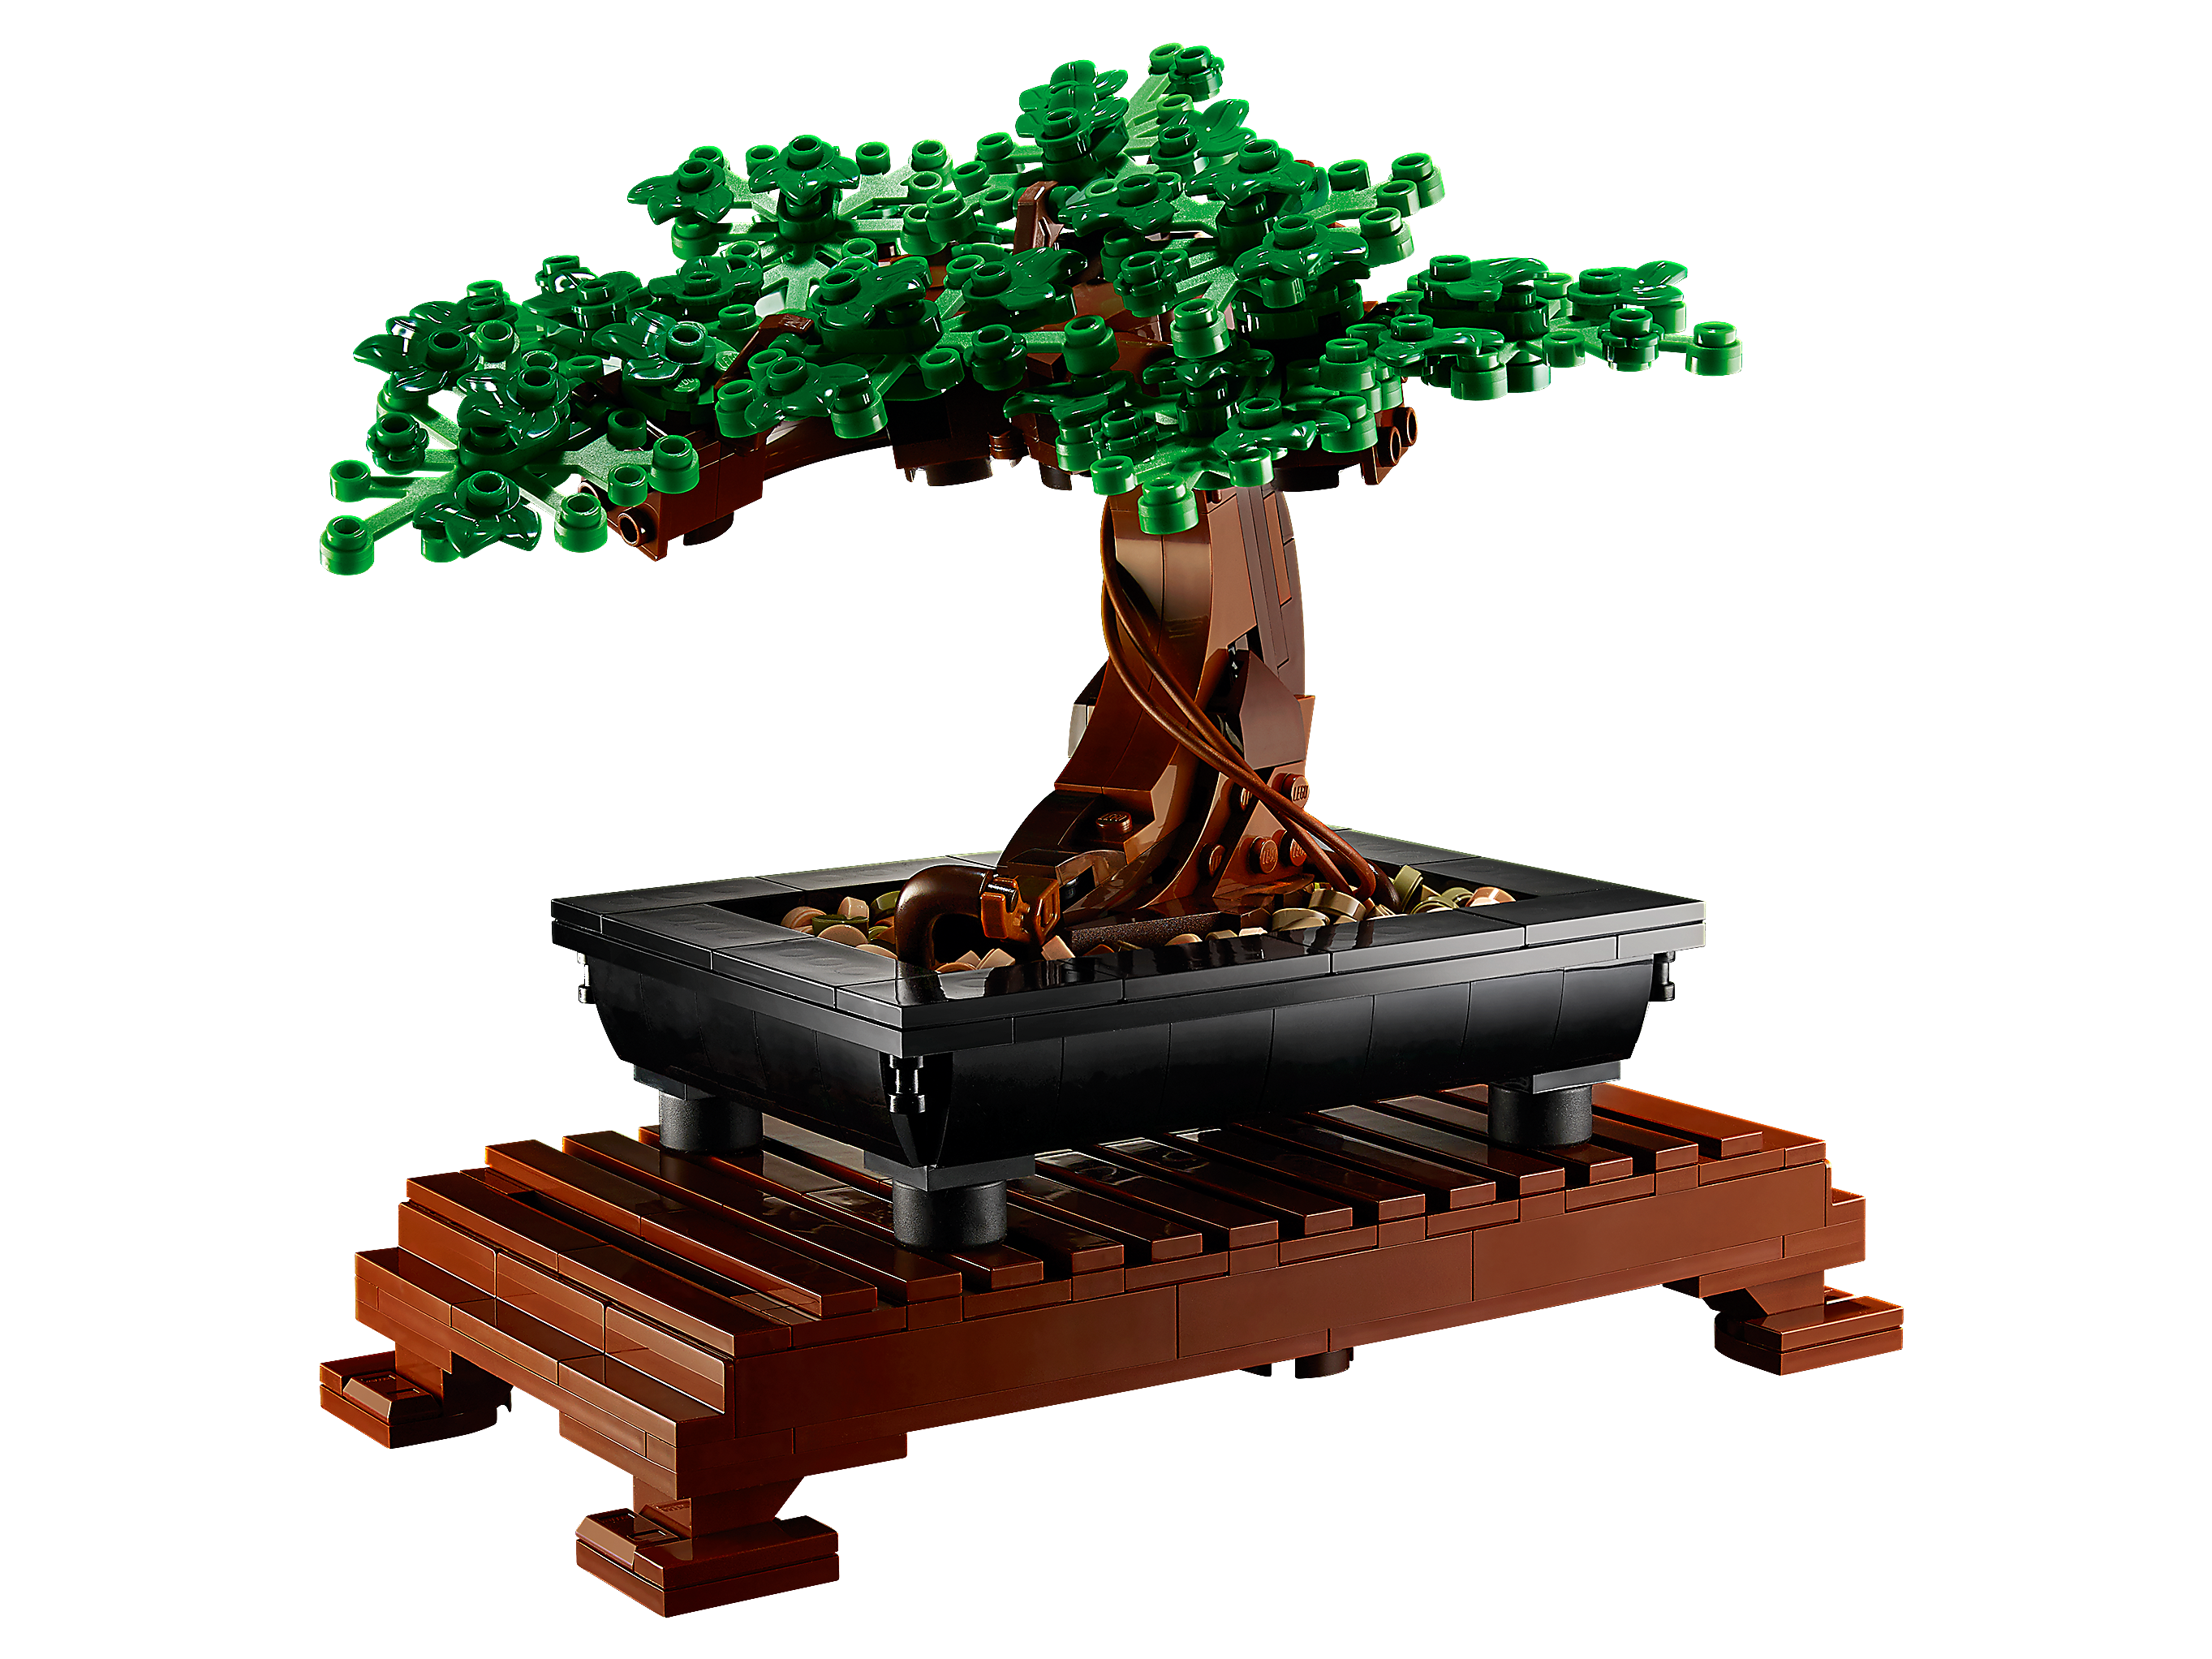 878 pcs Sealed! Brand New LEGO 10281 Botanical Collection Bonsai Tree 